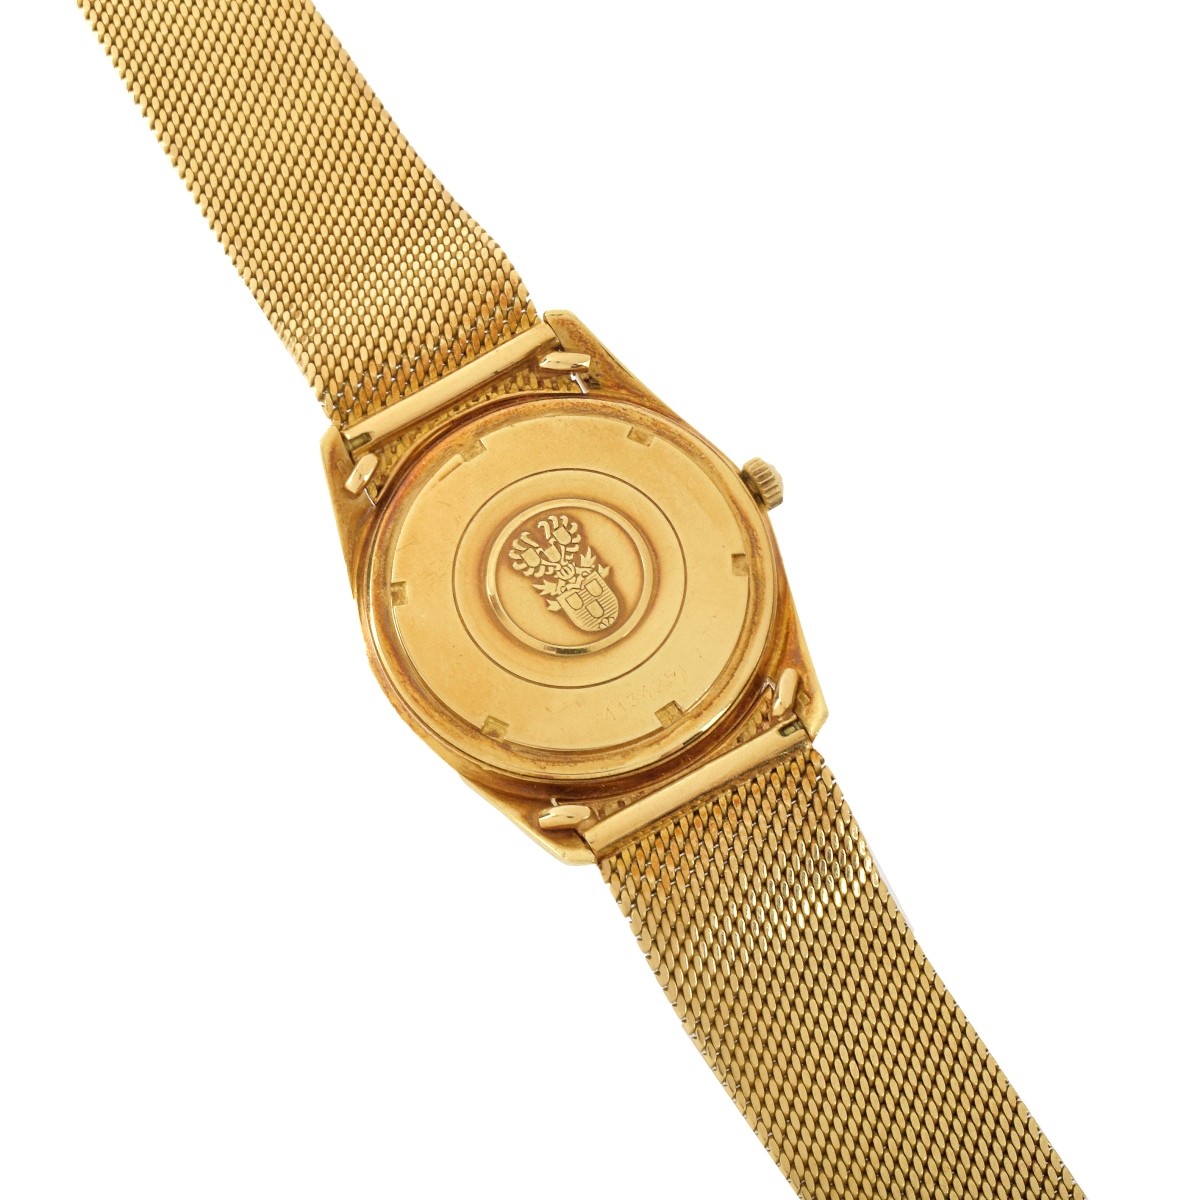 Eterna-Matic 18K Watch